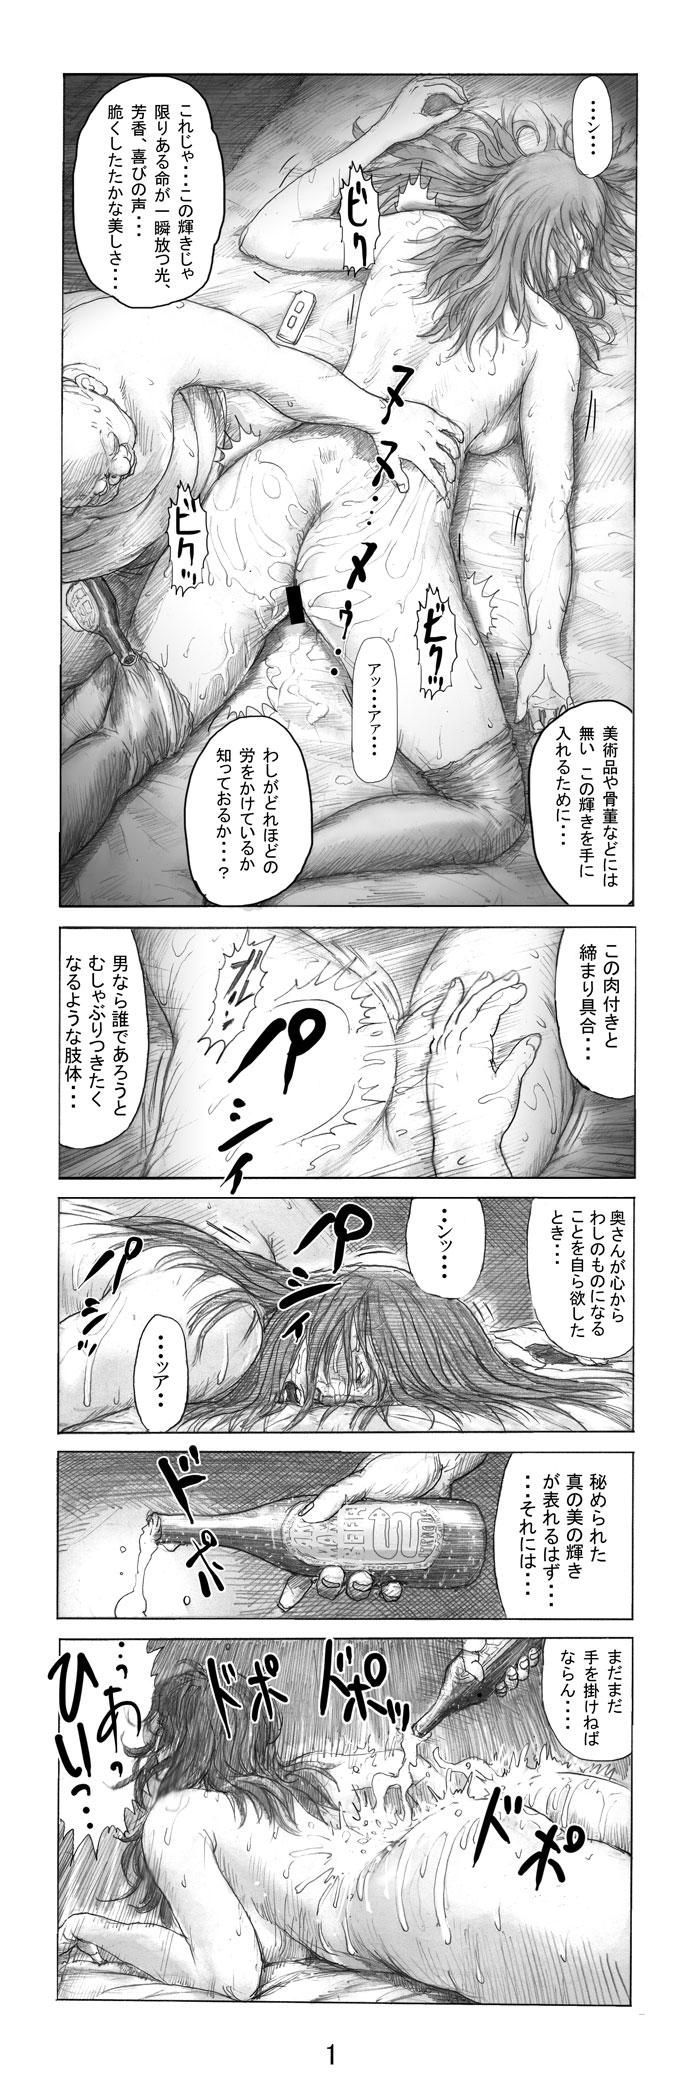 Hardcore Porn Utsukushii no Shingen Part 3 Free - Page 2